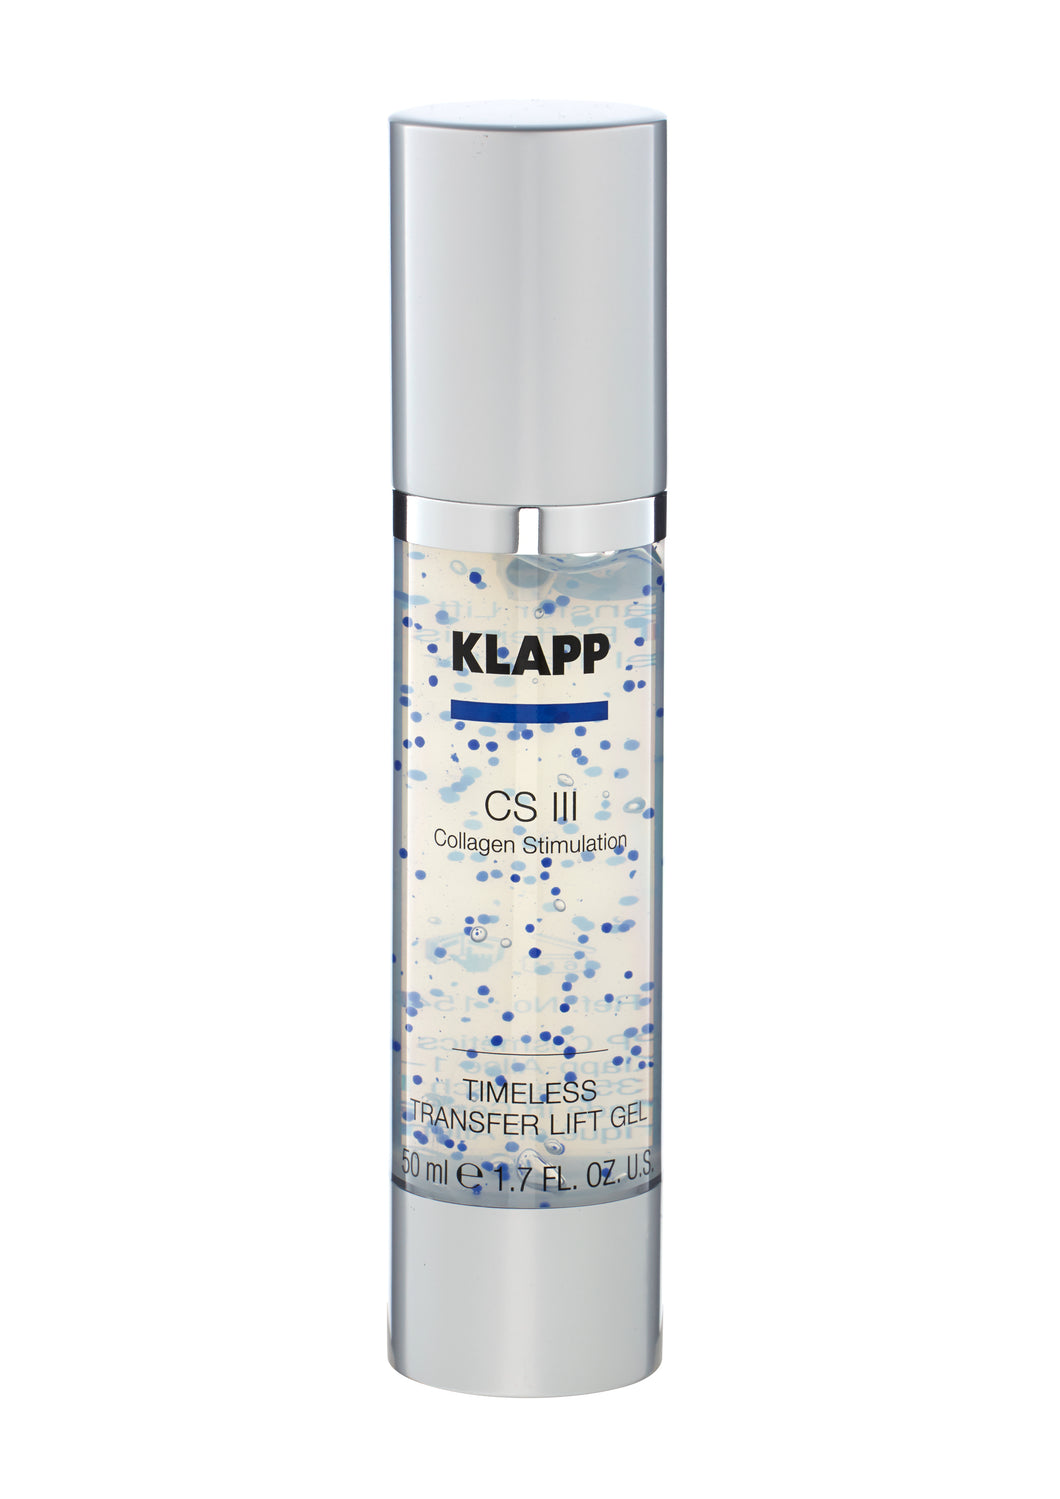 KLAPP CS III Timeless Transfer Lift Gel 50ml